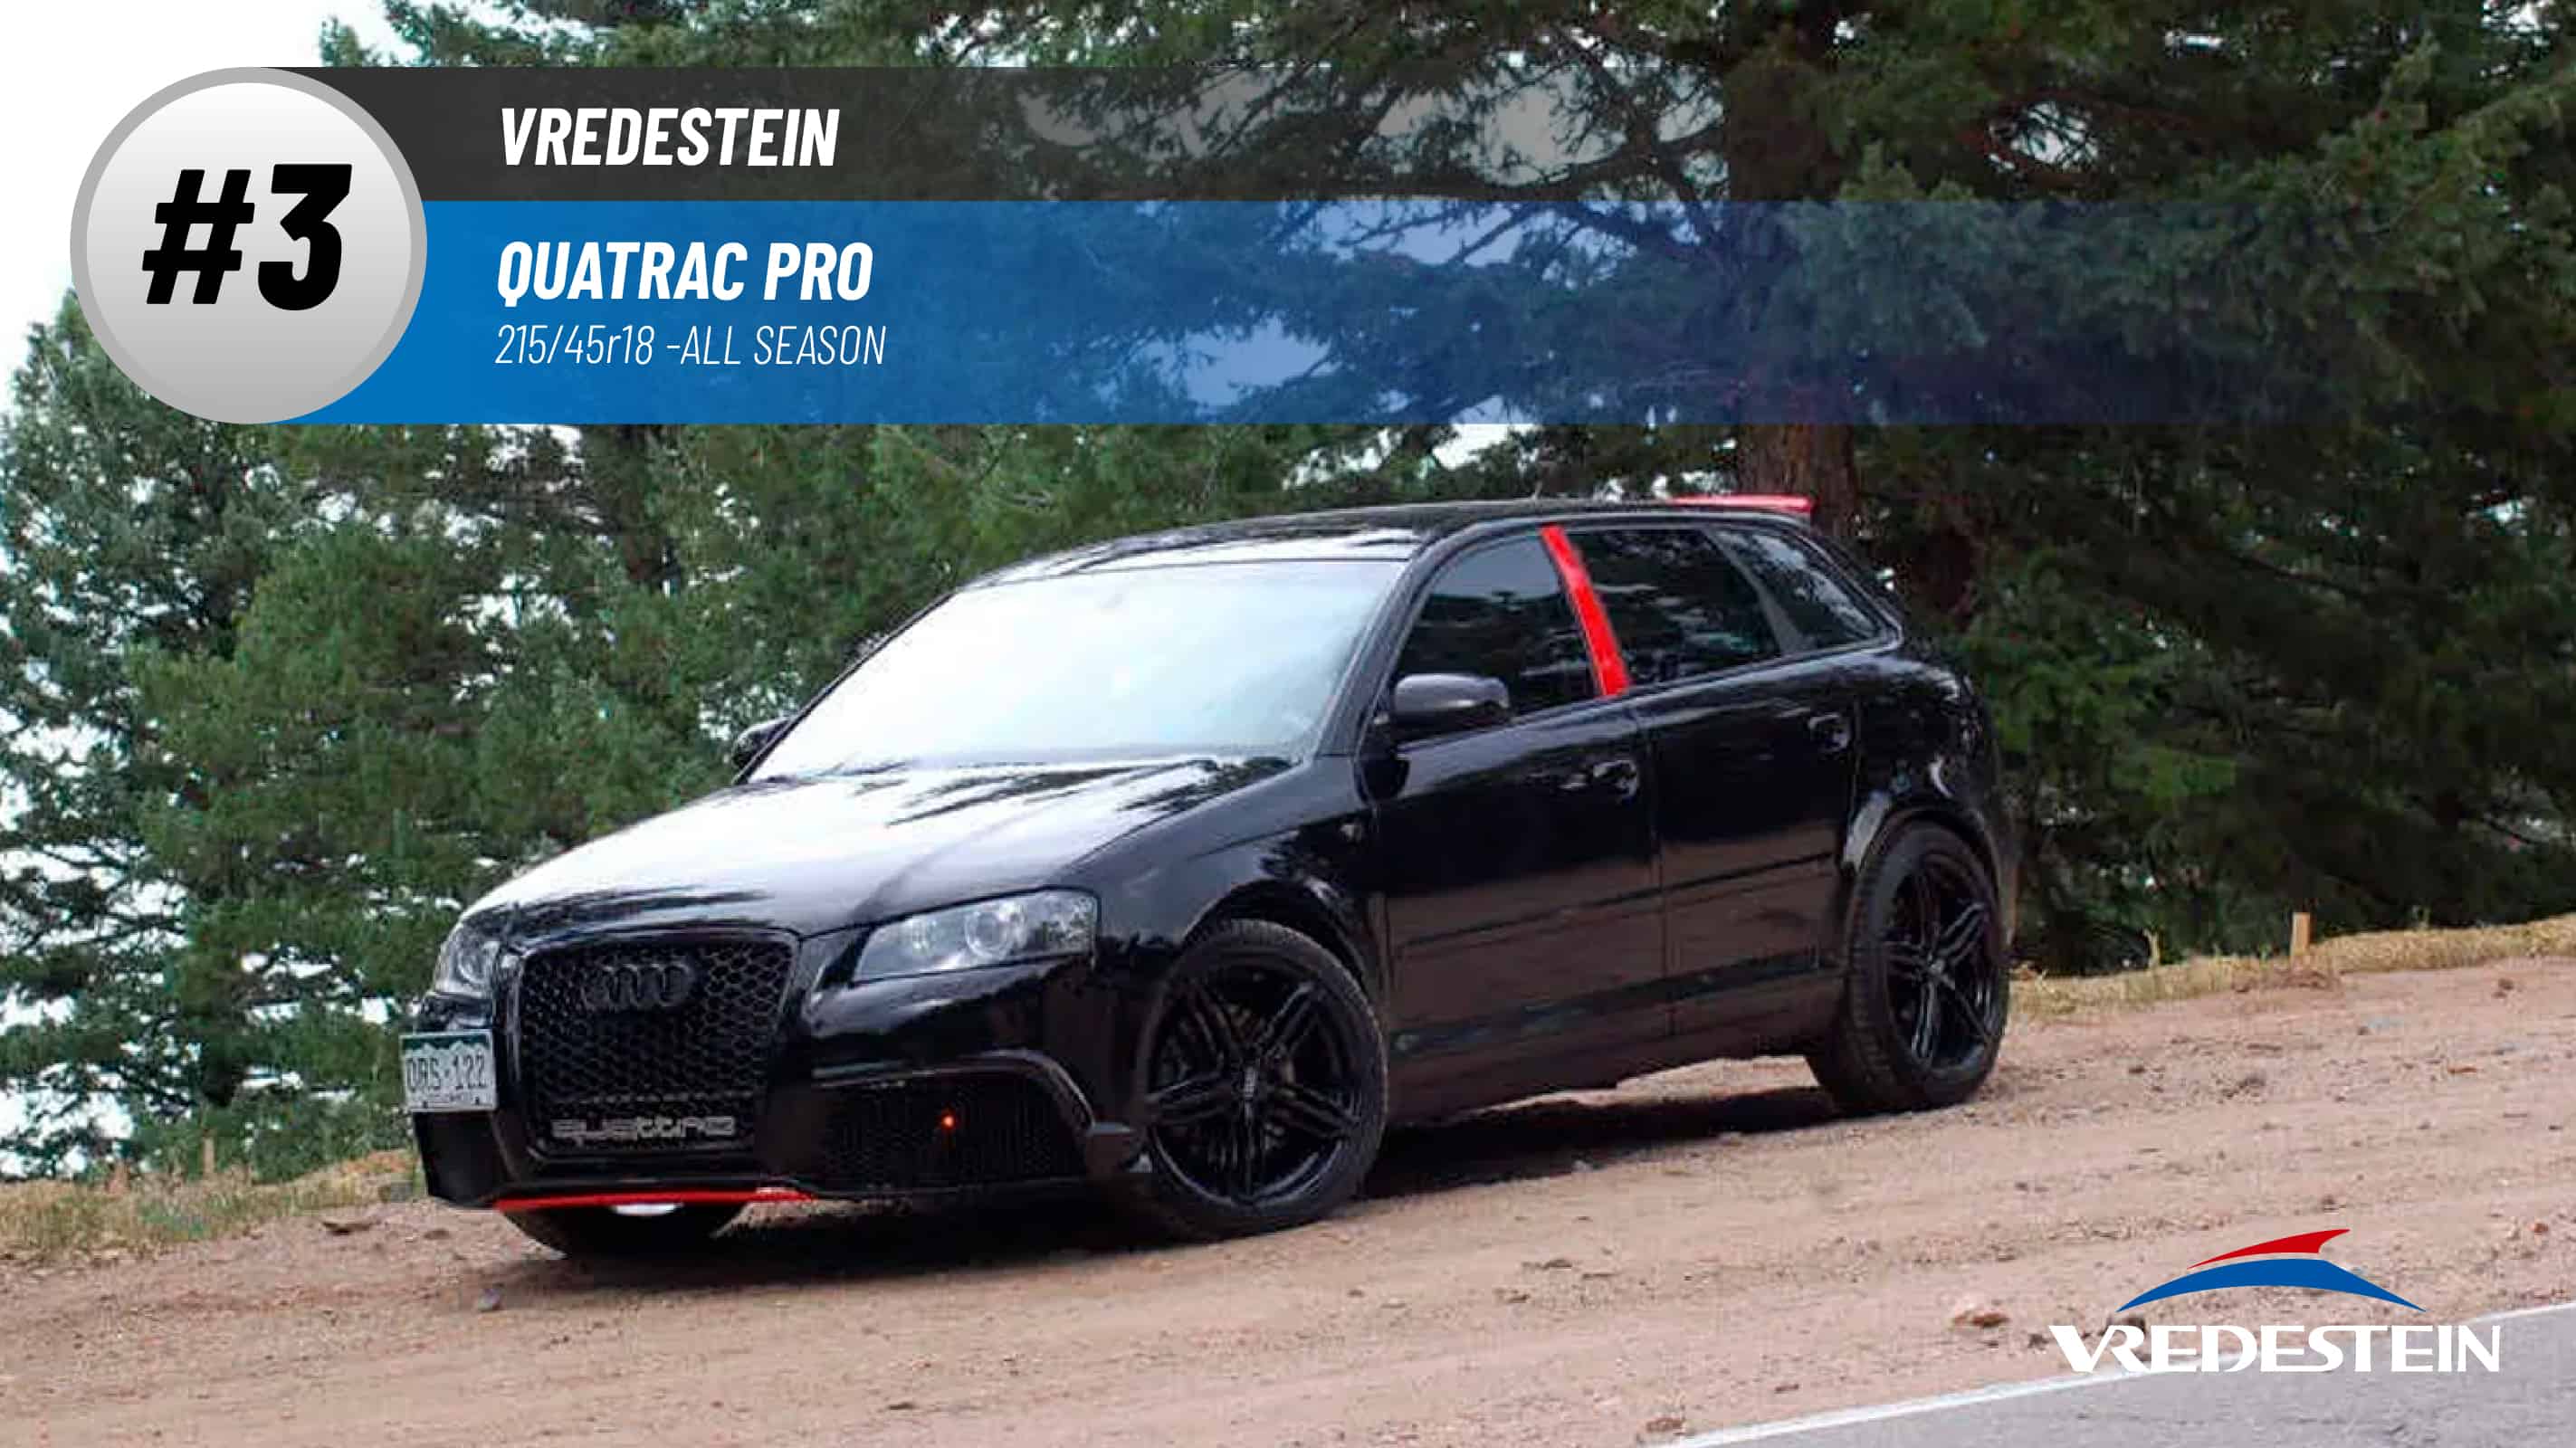 Top #3 All Season Tires: Vredestein Quatrac Pro – 215/45r18